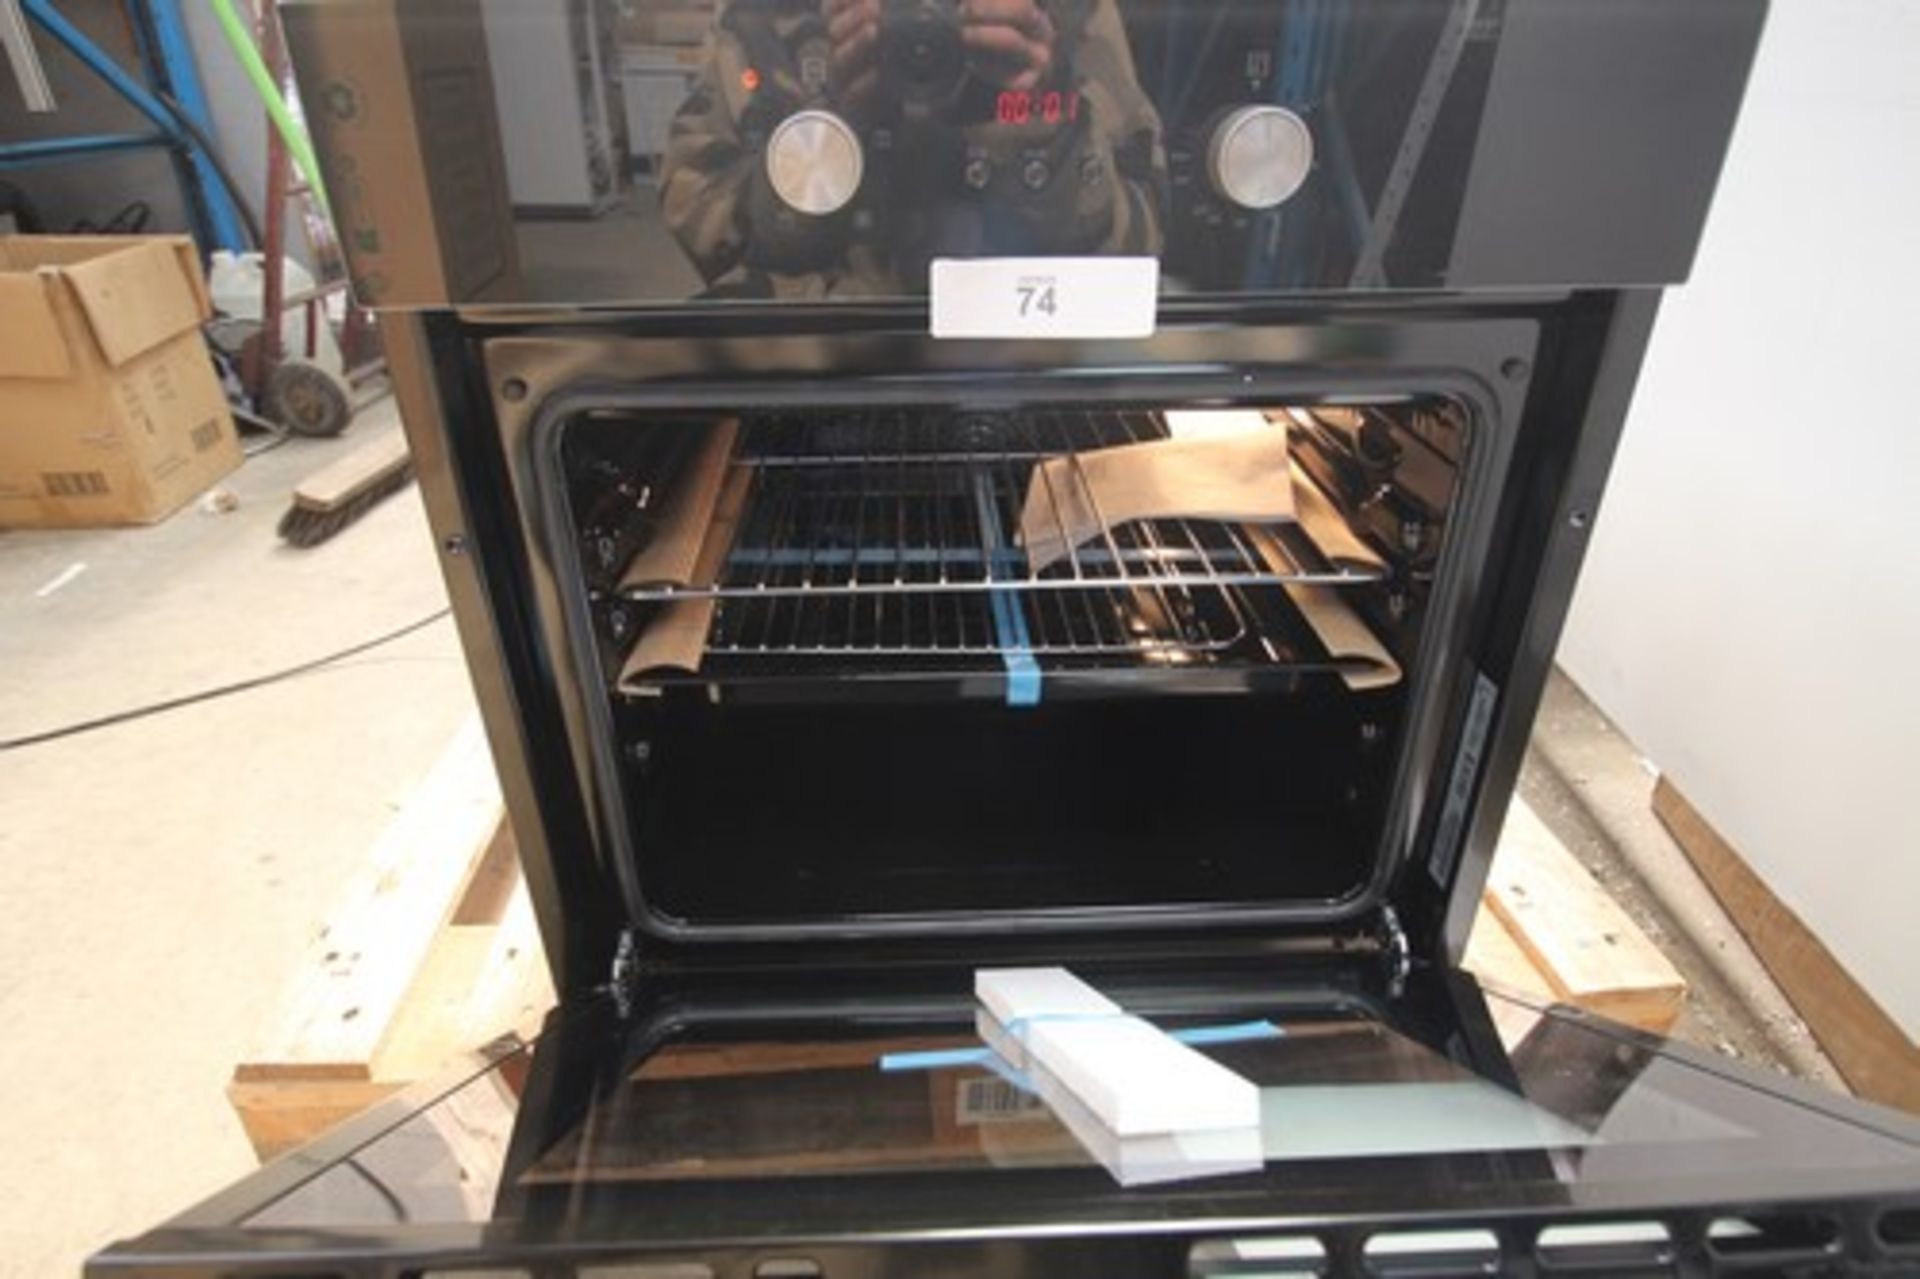 1 x Culina 65L single oven, black, model No: UB0652BK, dent on centre back panel - new (ES9) - Image 2 of 4